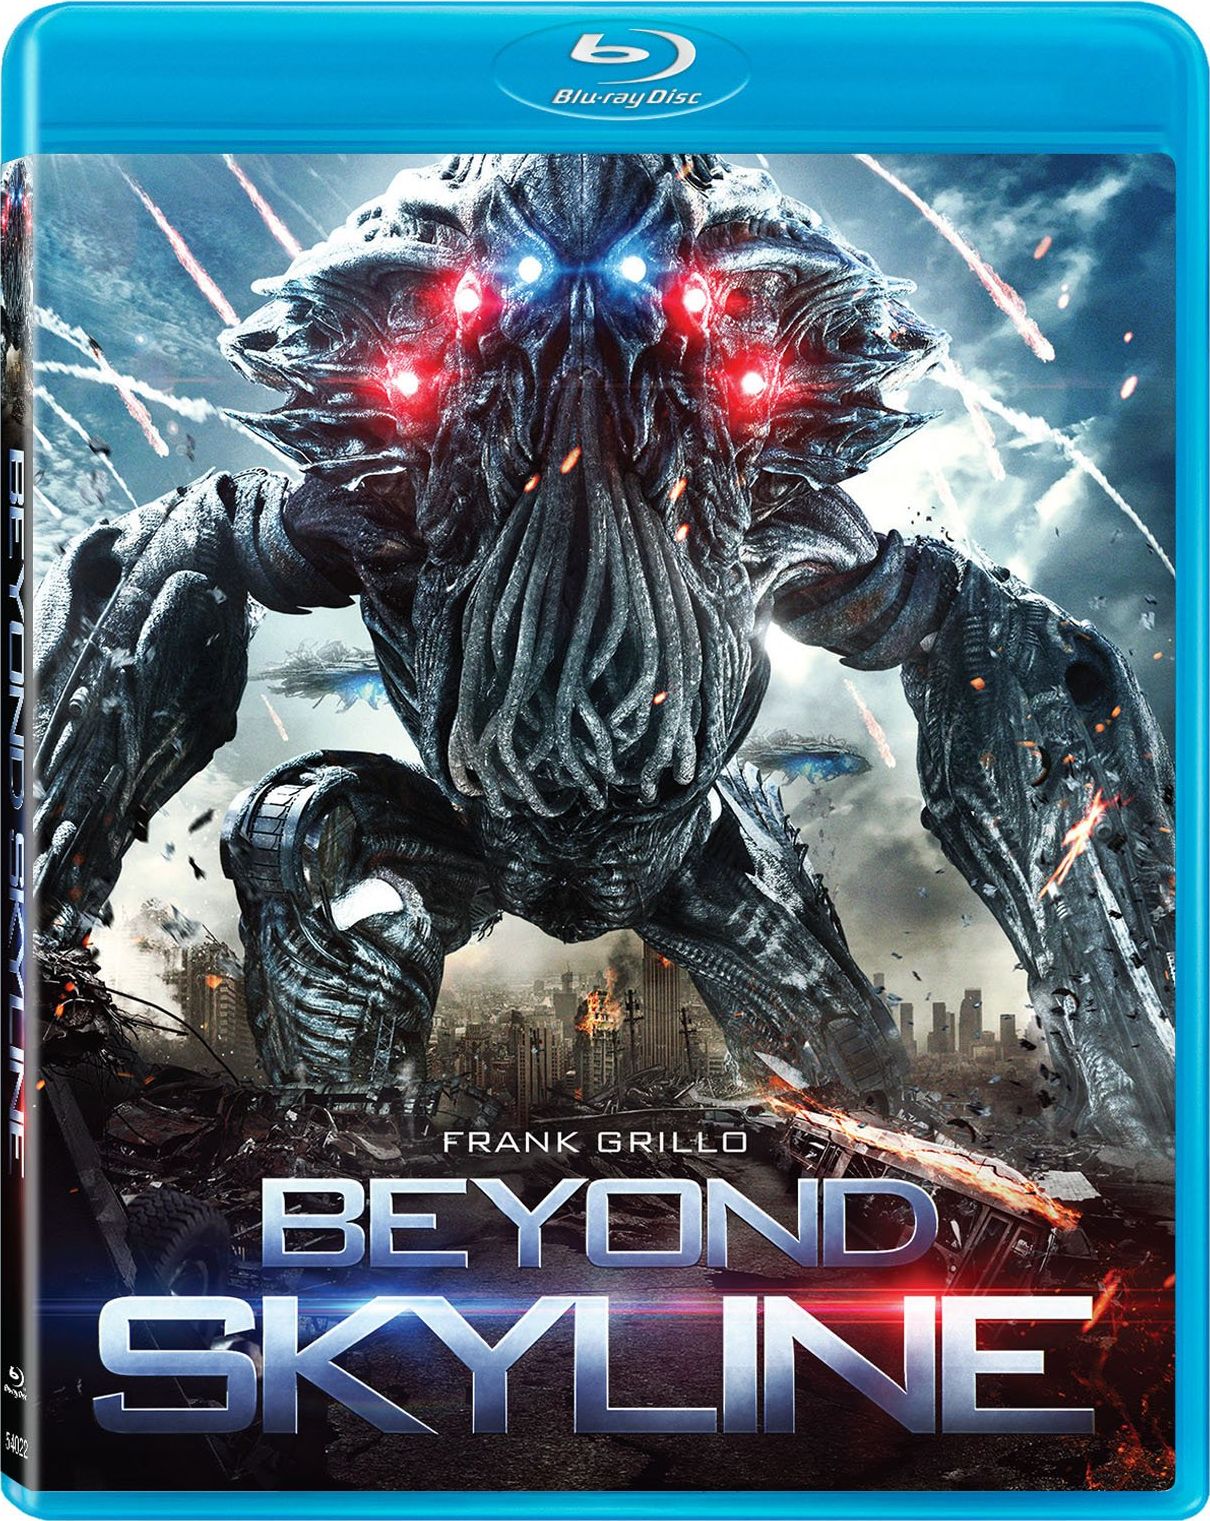 Beyond Skyline DVD Release Date January 16, 2018